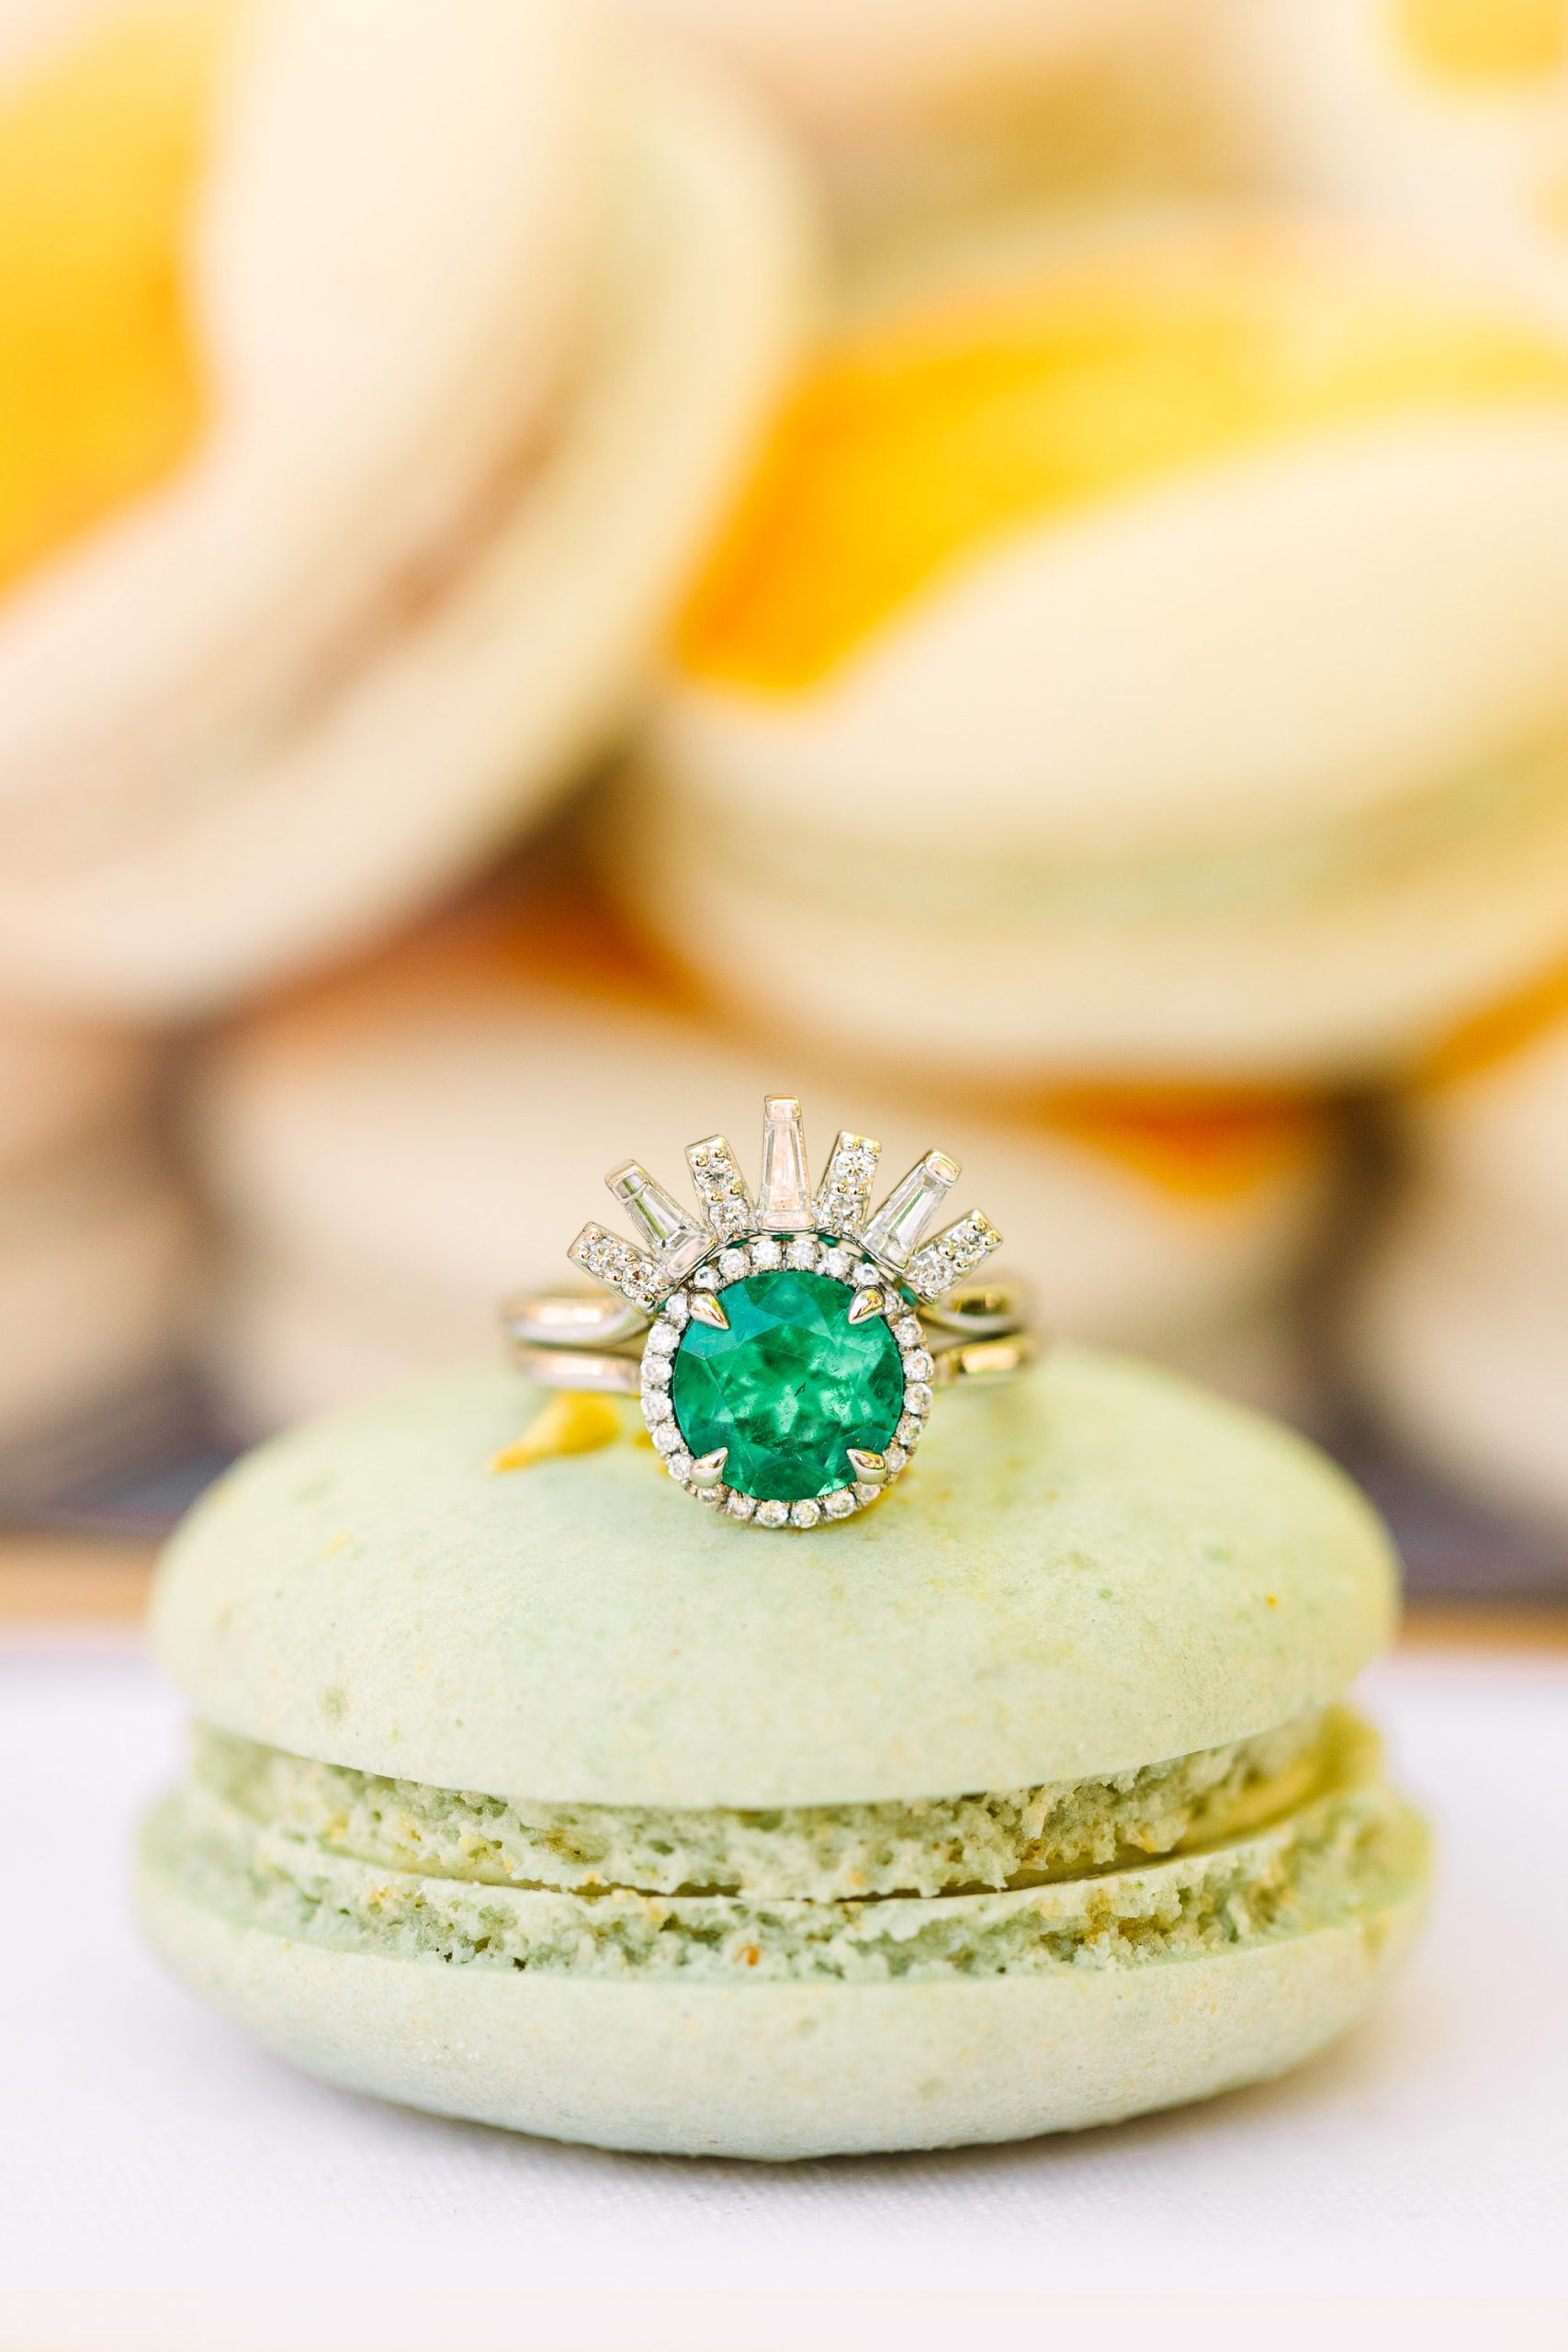 Art Deco inspired emerald engagement ring with macaron - www.marycostaweddings.com